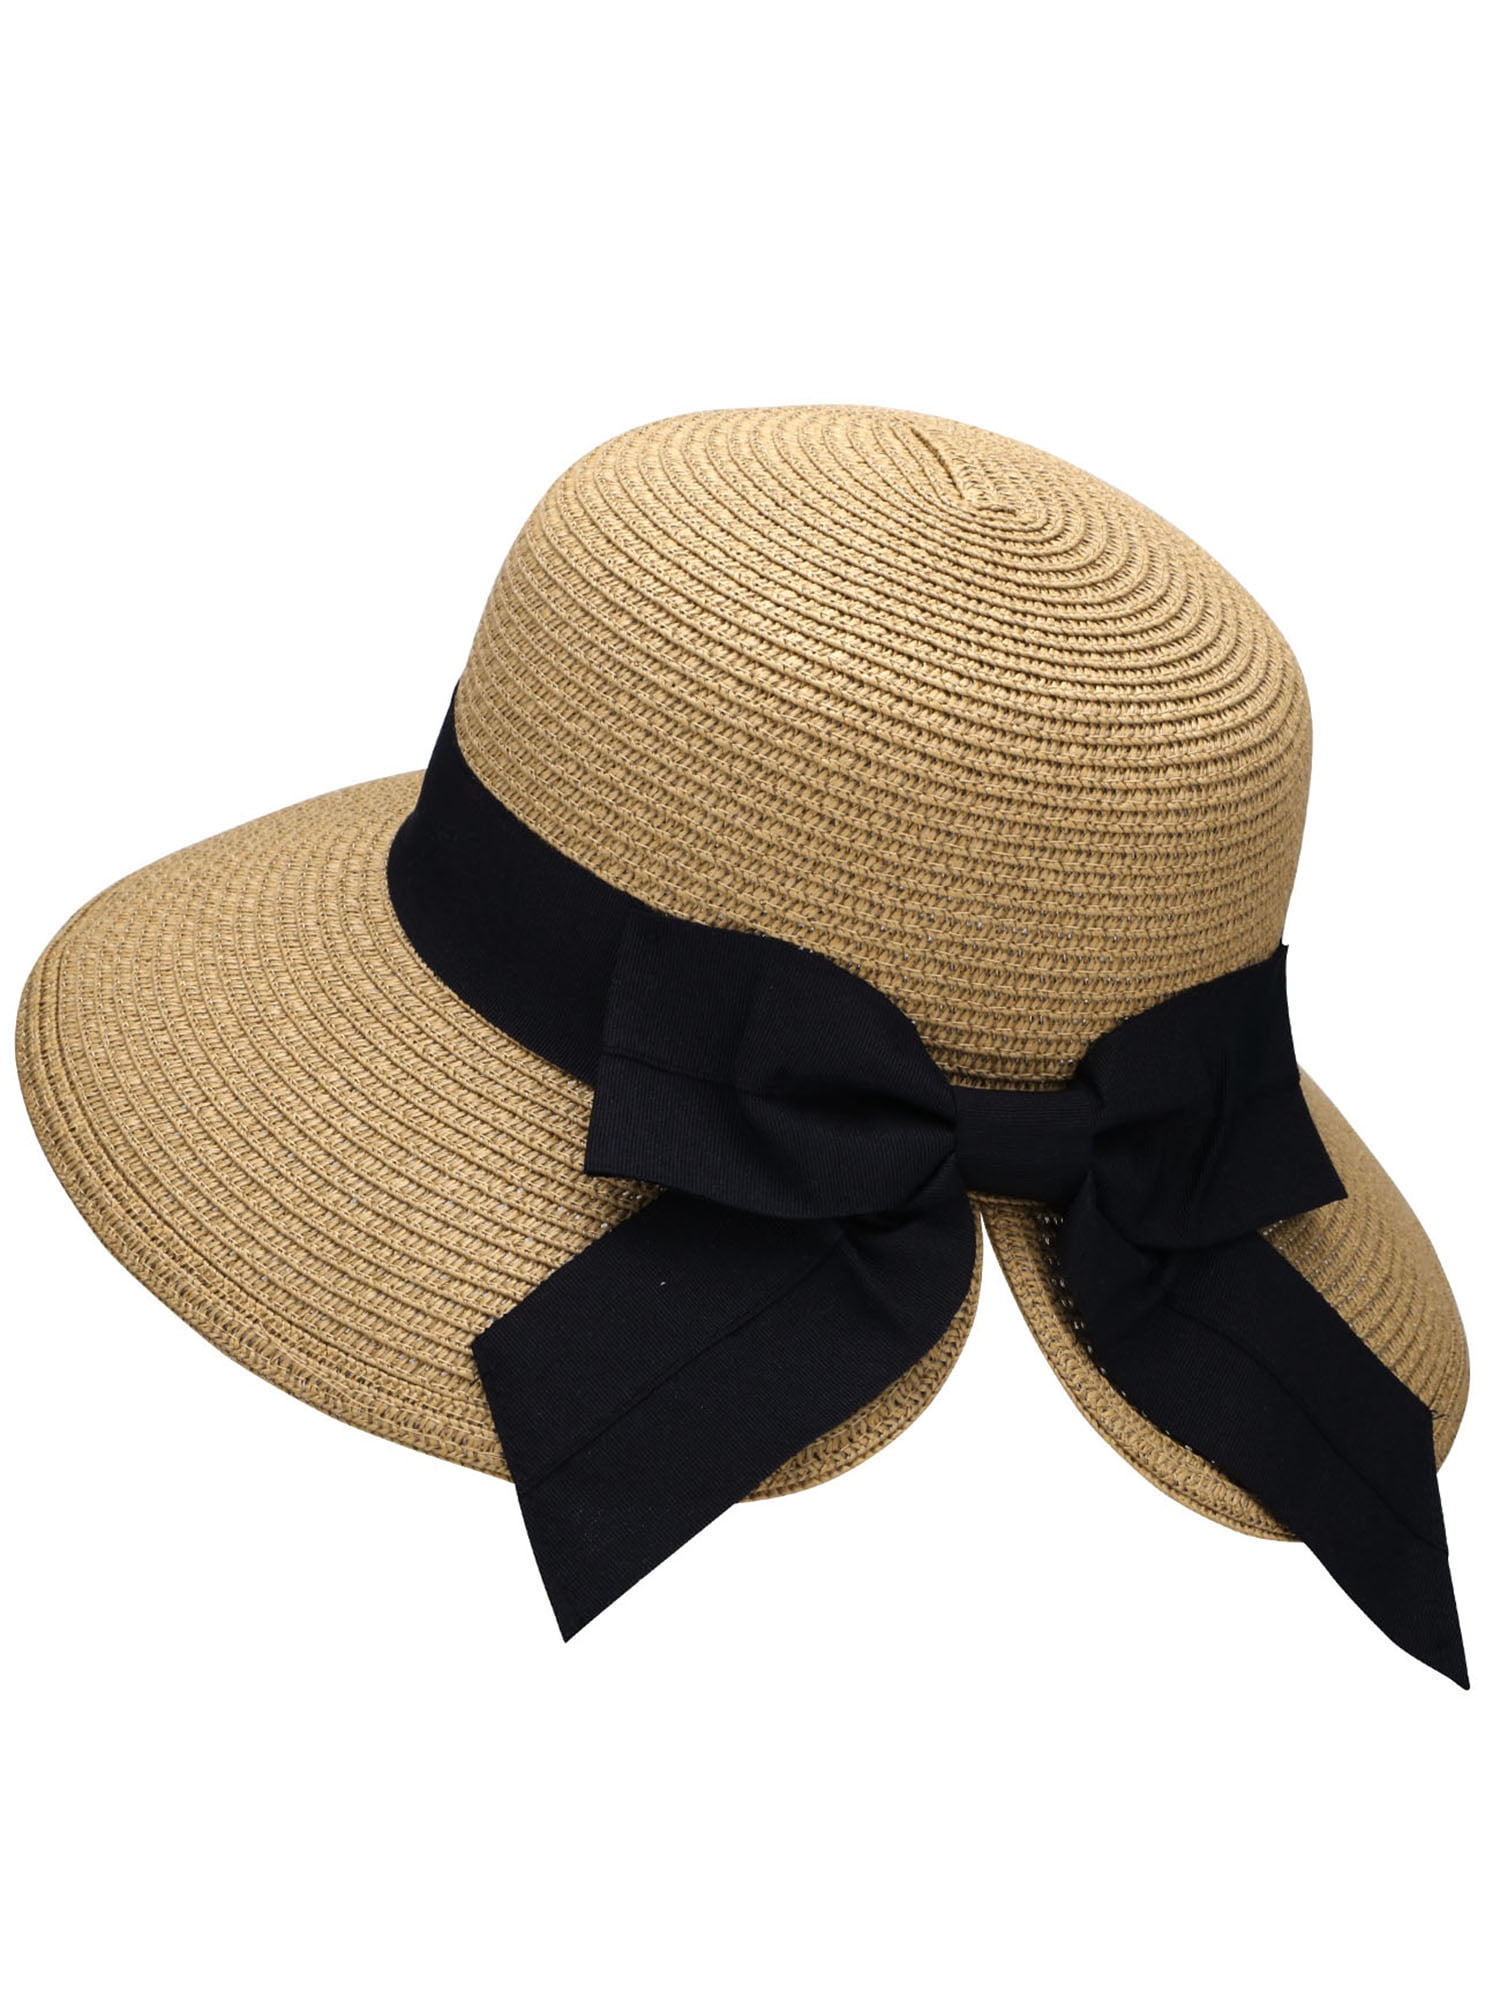 100% Wheat Straw Wome Sun Hat for Lady Summer Beach Flat Hawai Sunbonnet Pork Pie Hat Shell Belt Size